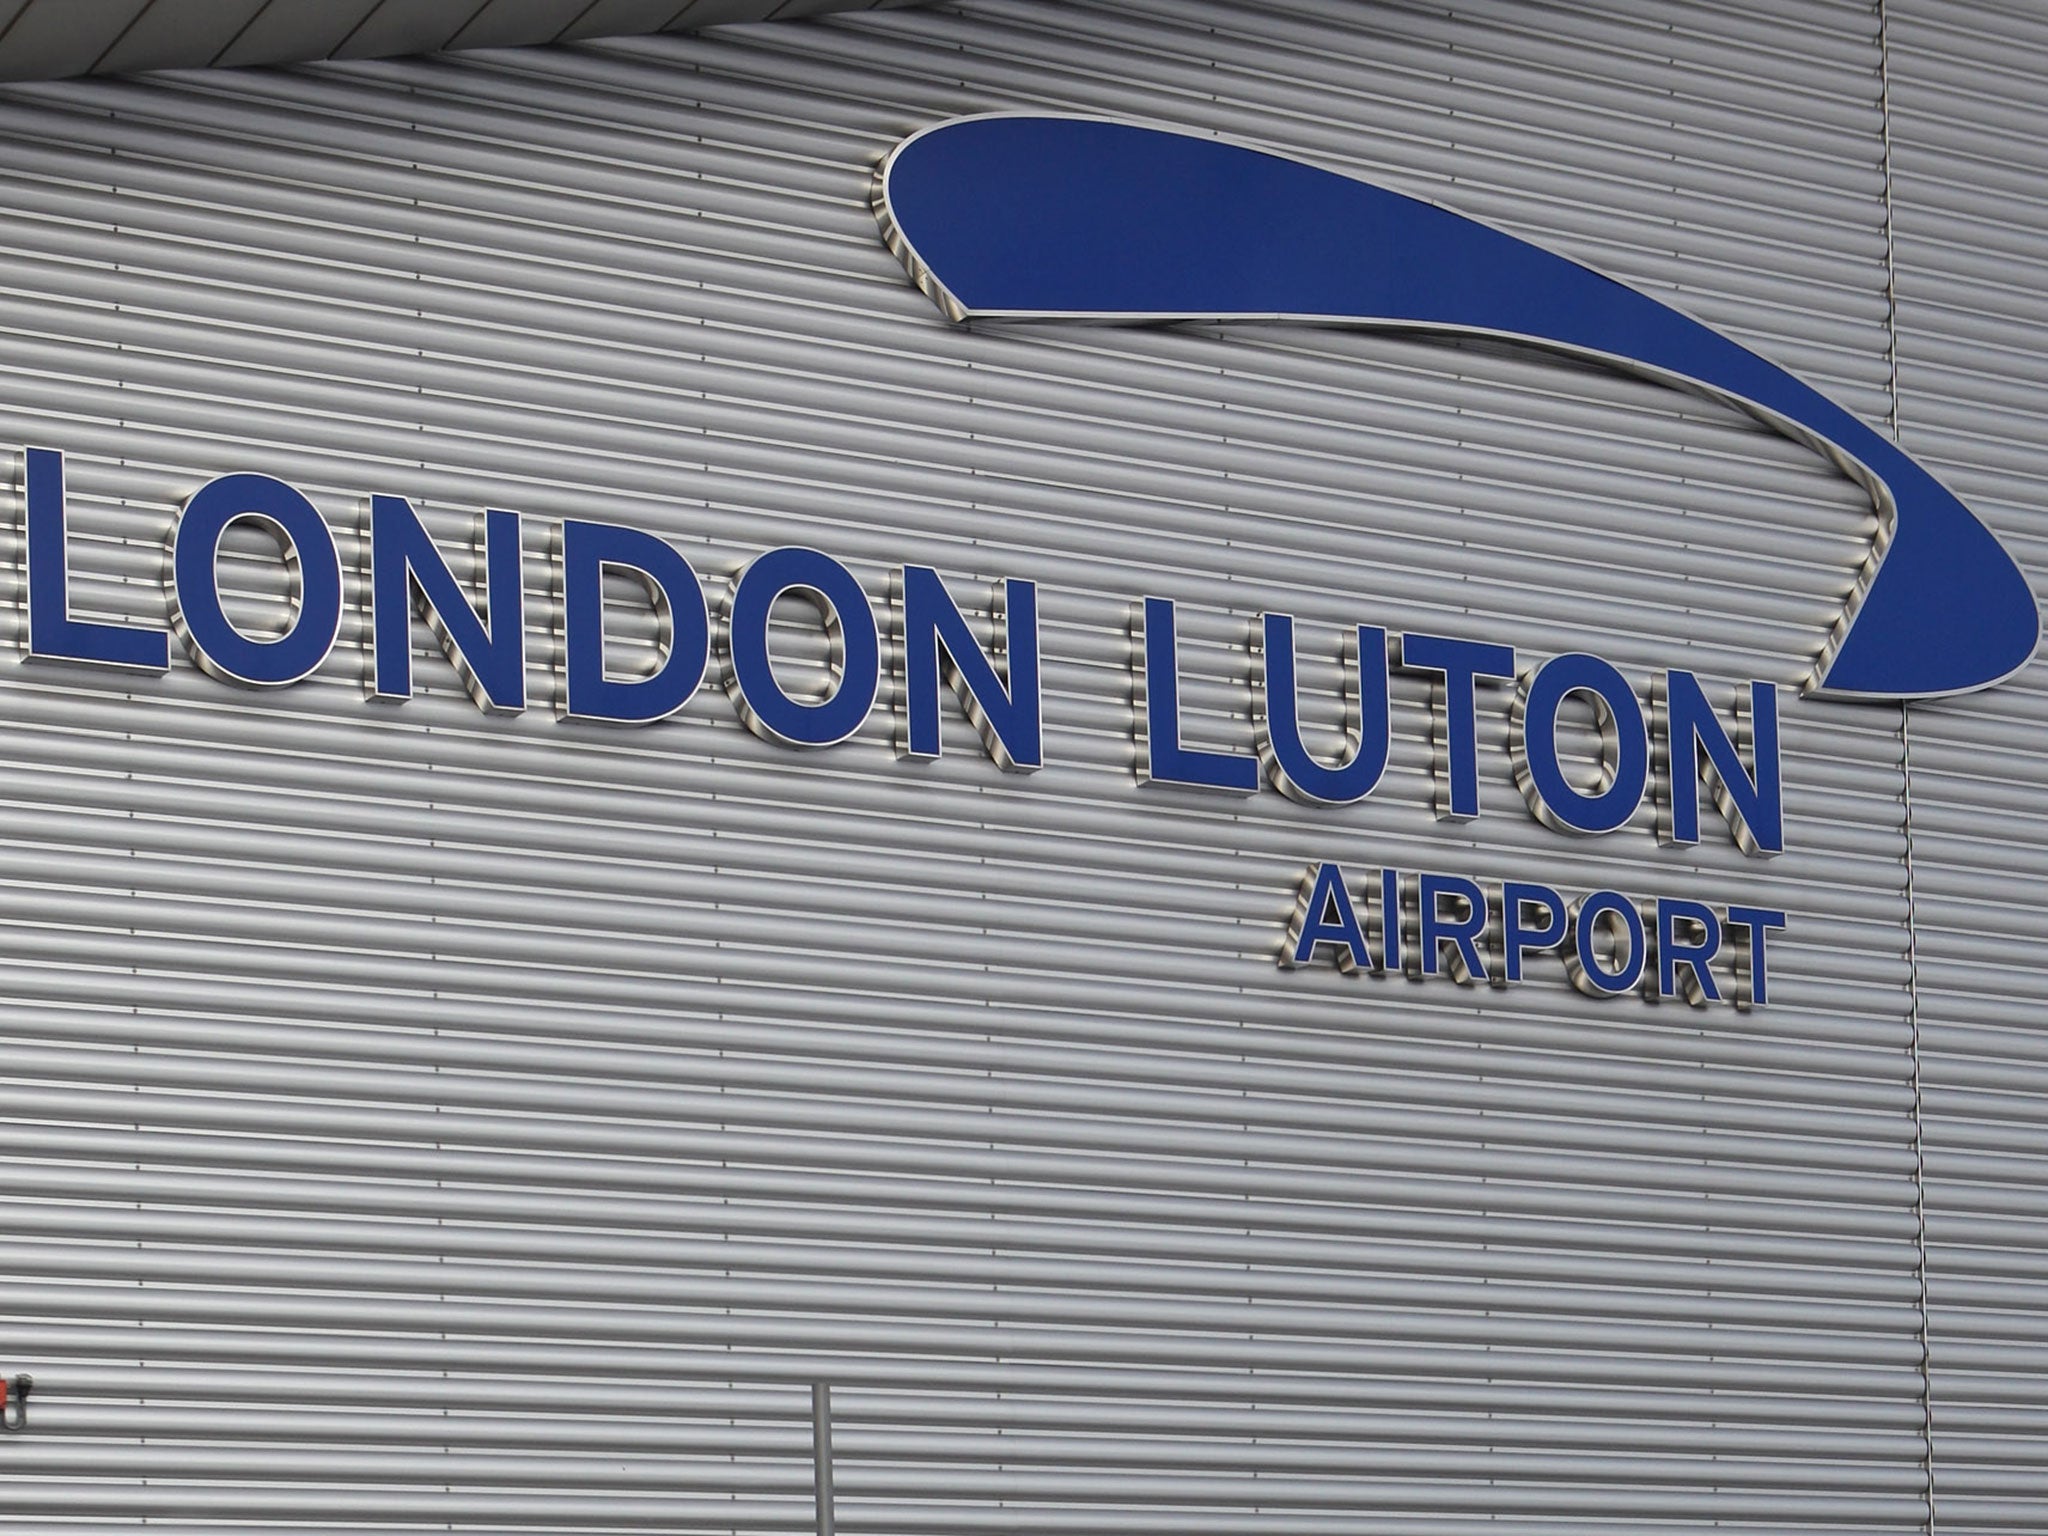 Luton airport